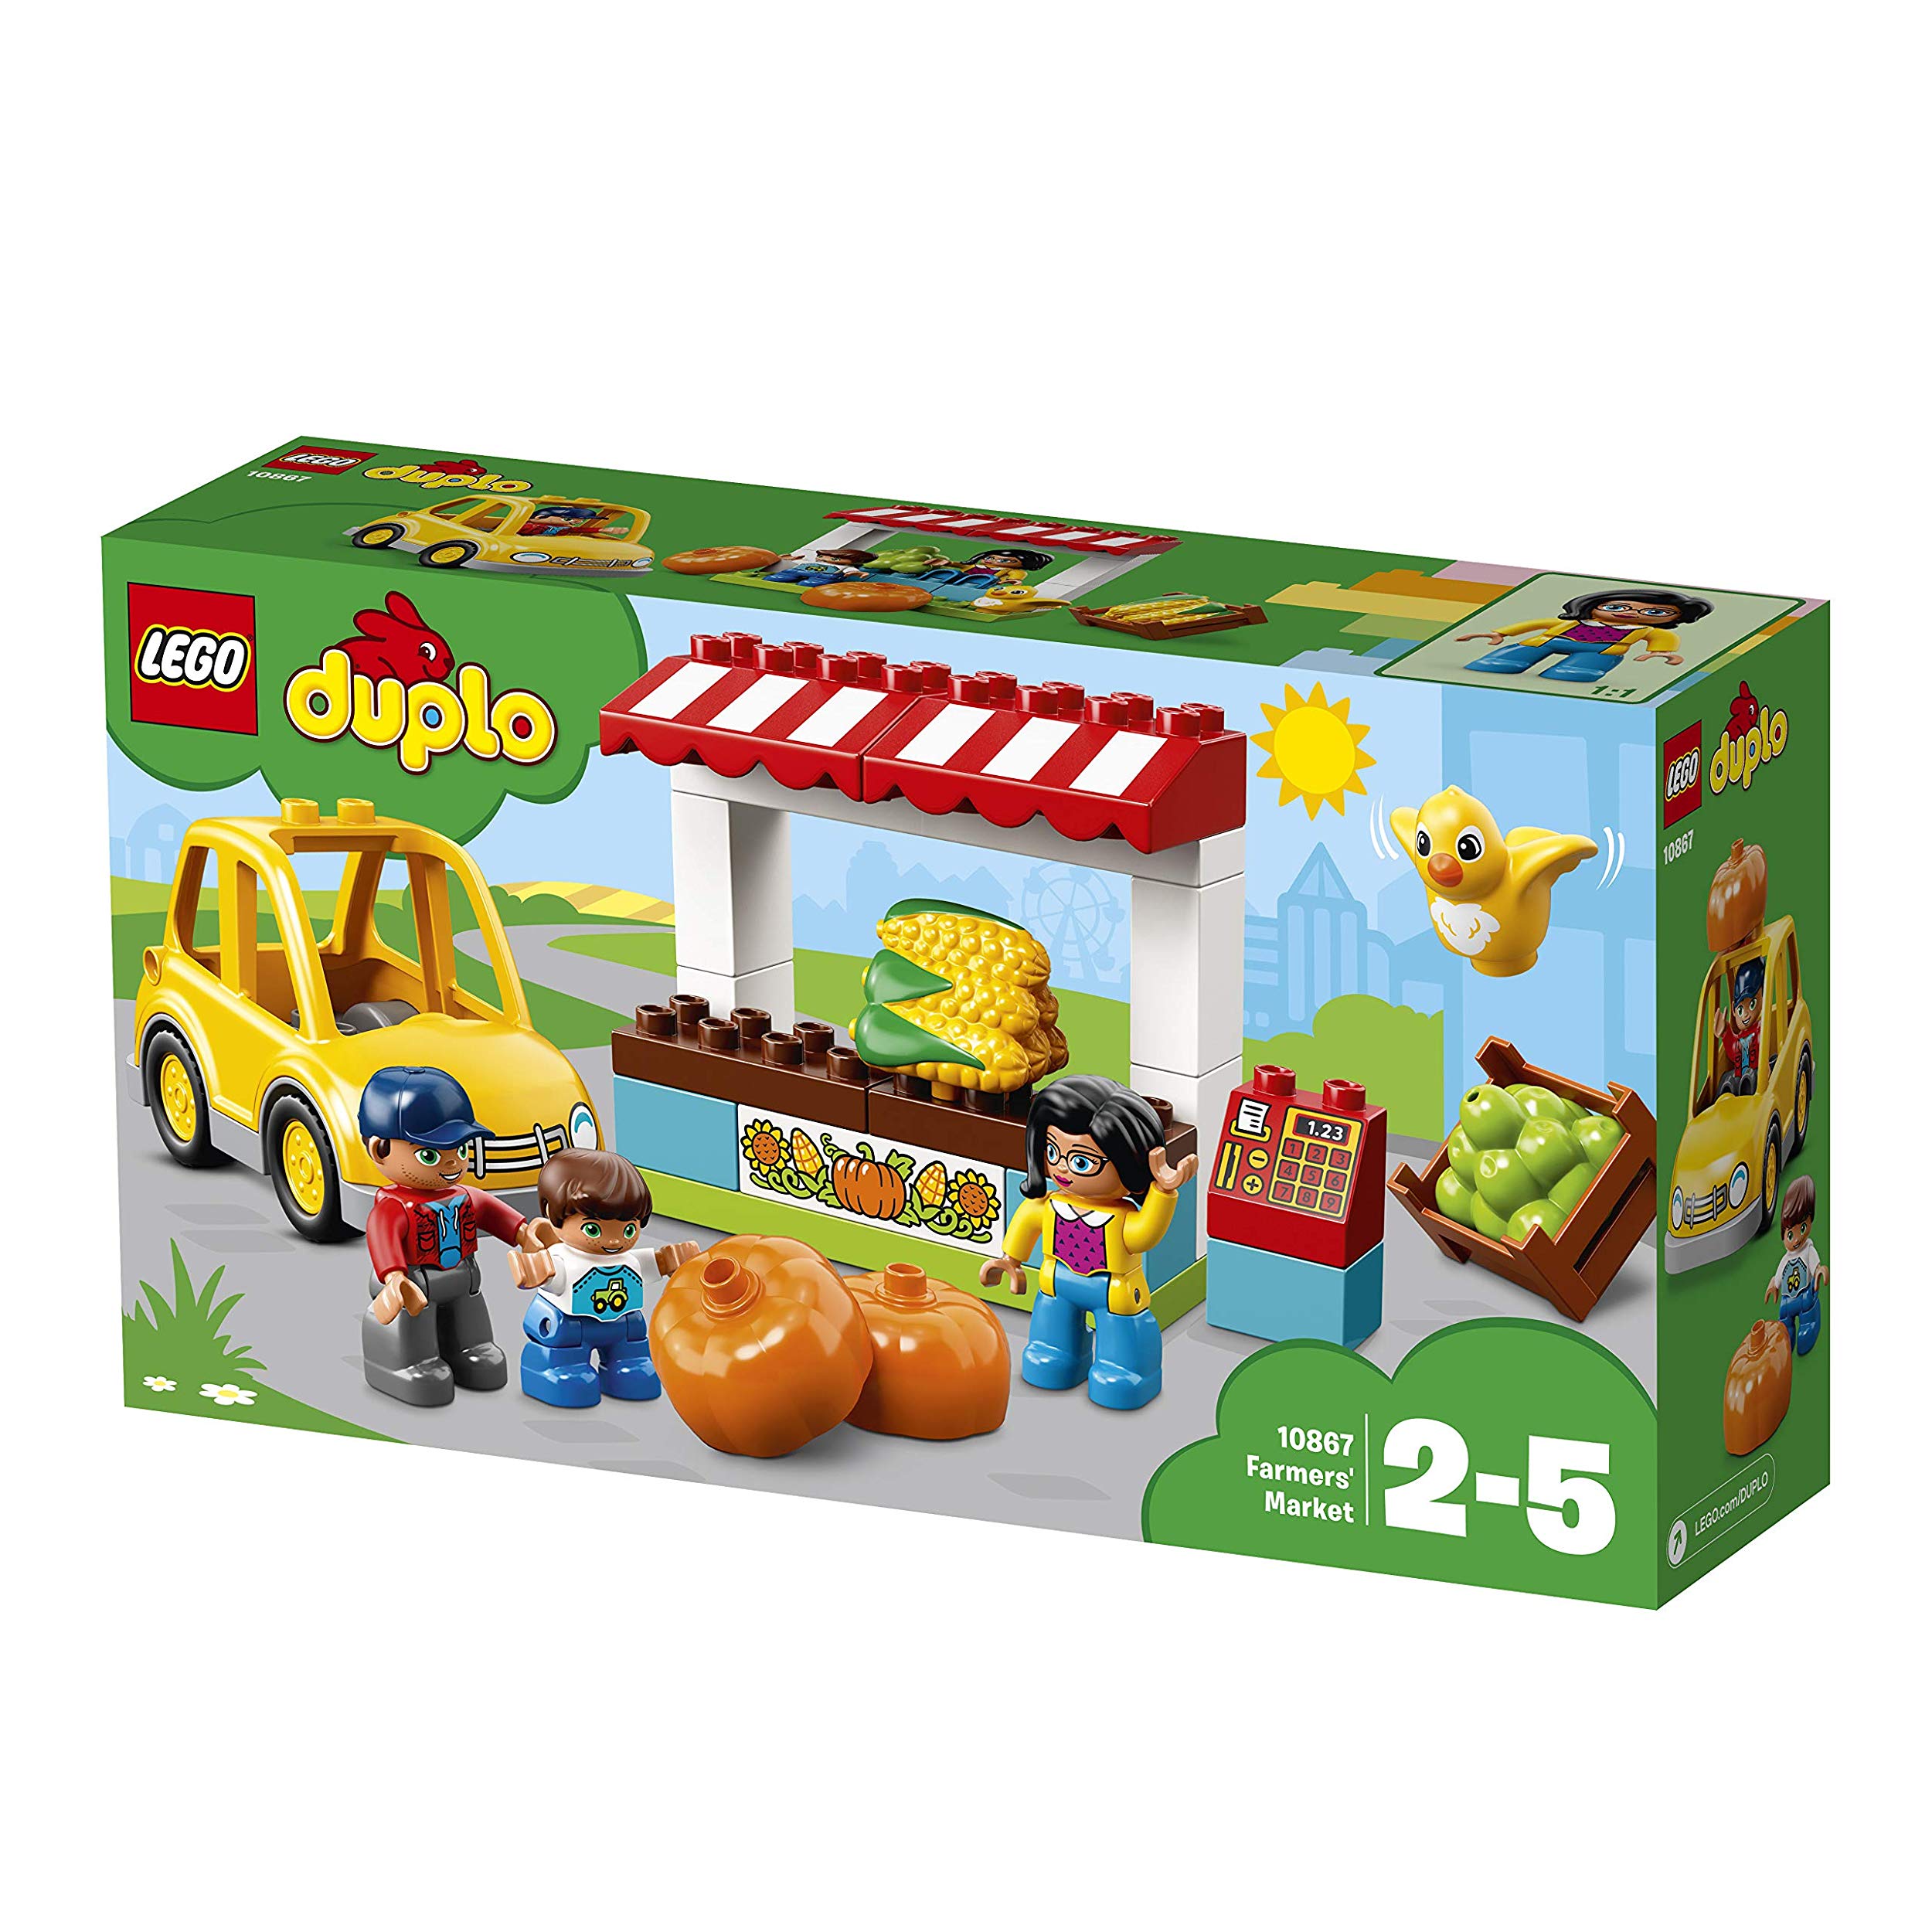 Lego Duplo Farmers Market Large Building Blocks